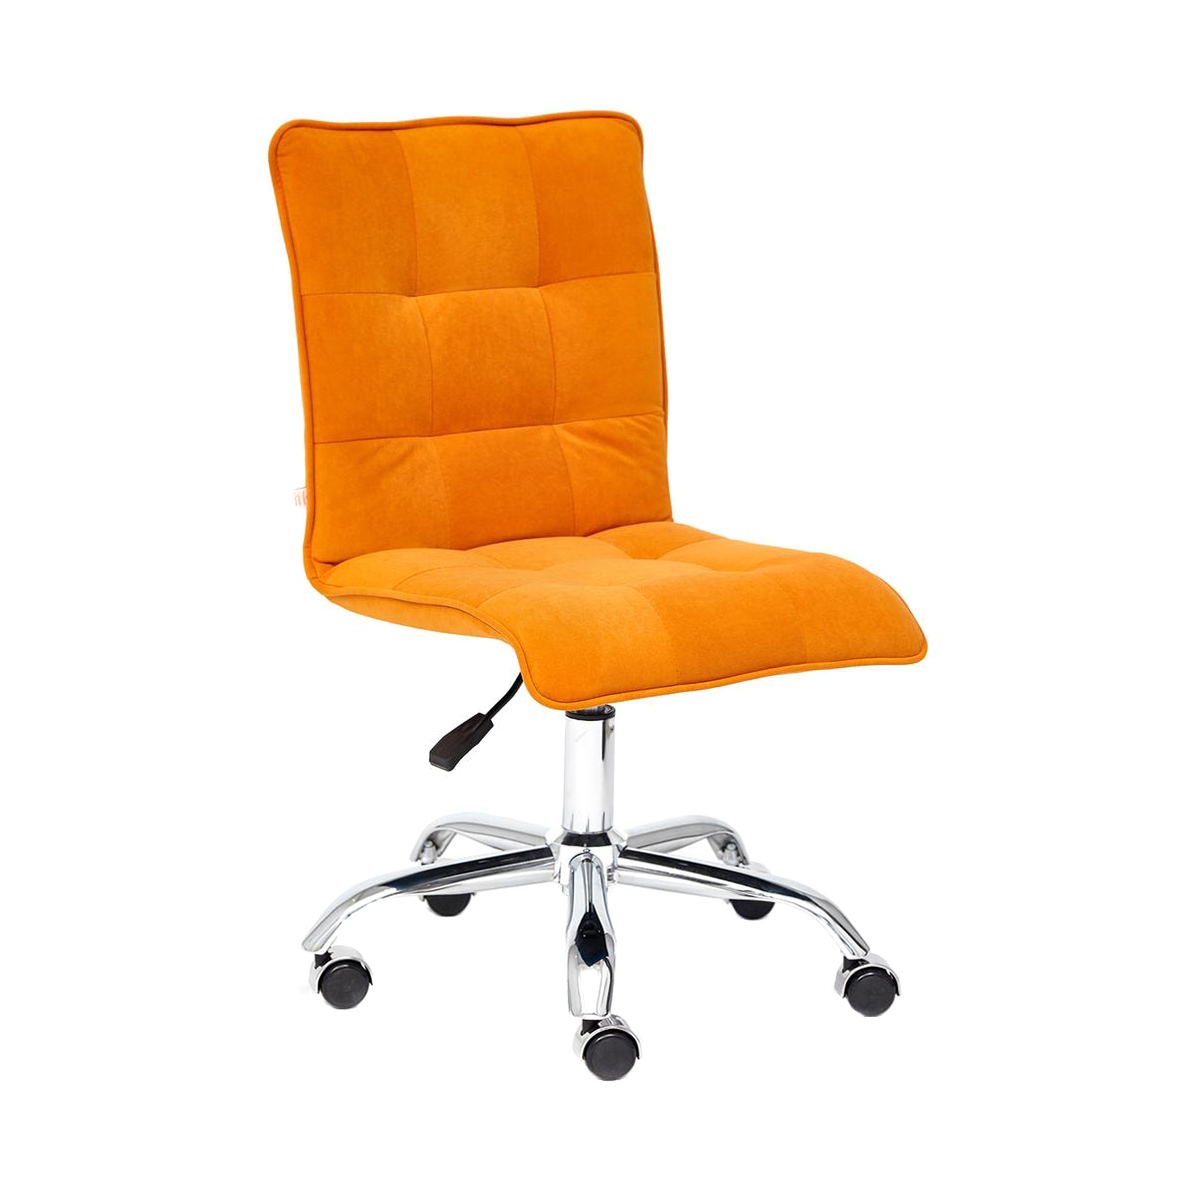 Кресло офисное TC до 100 кг 96х45х40 см оранжевый кресло офисное tc до 100 кг 96х45х40 см молочный